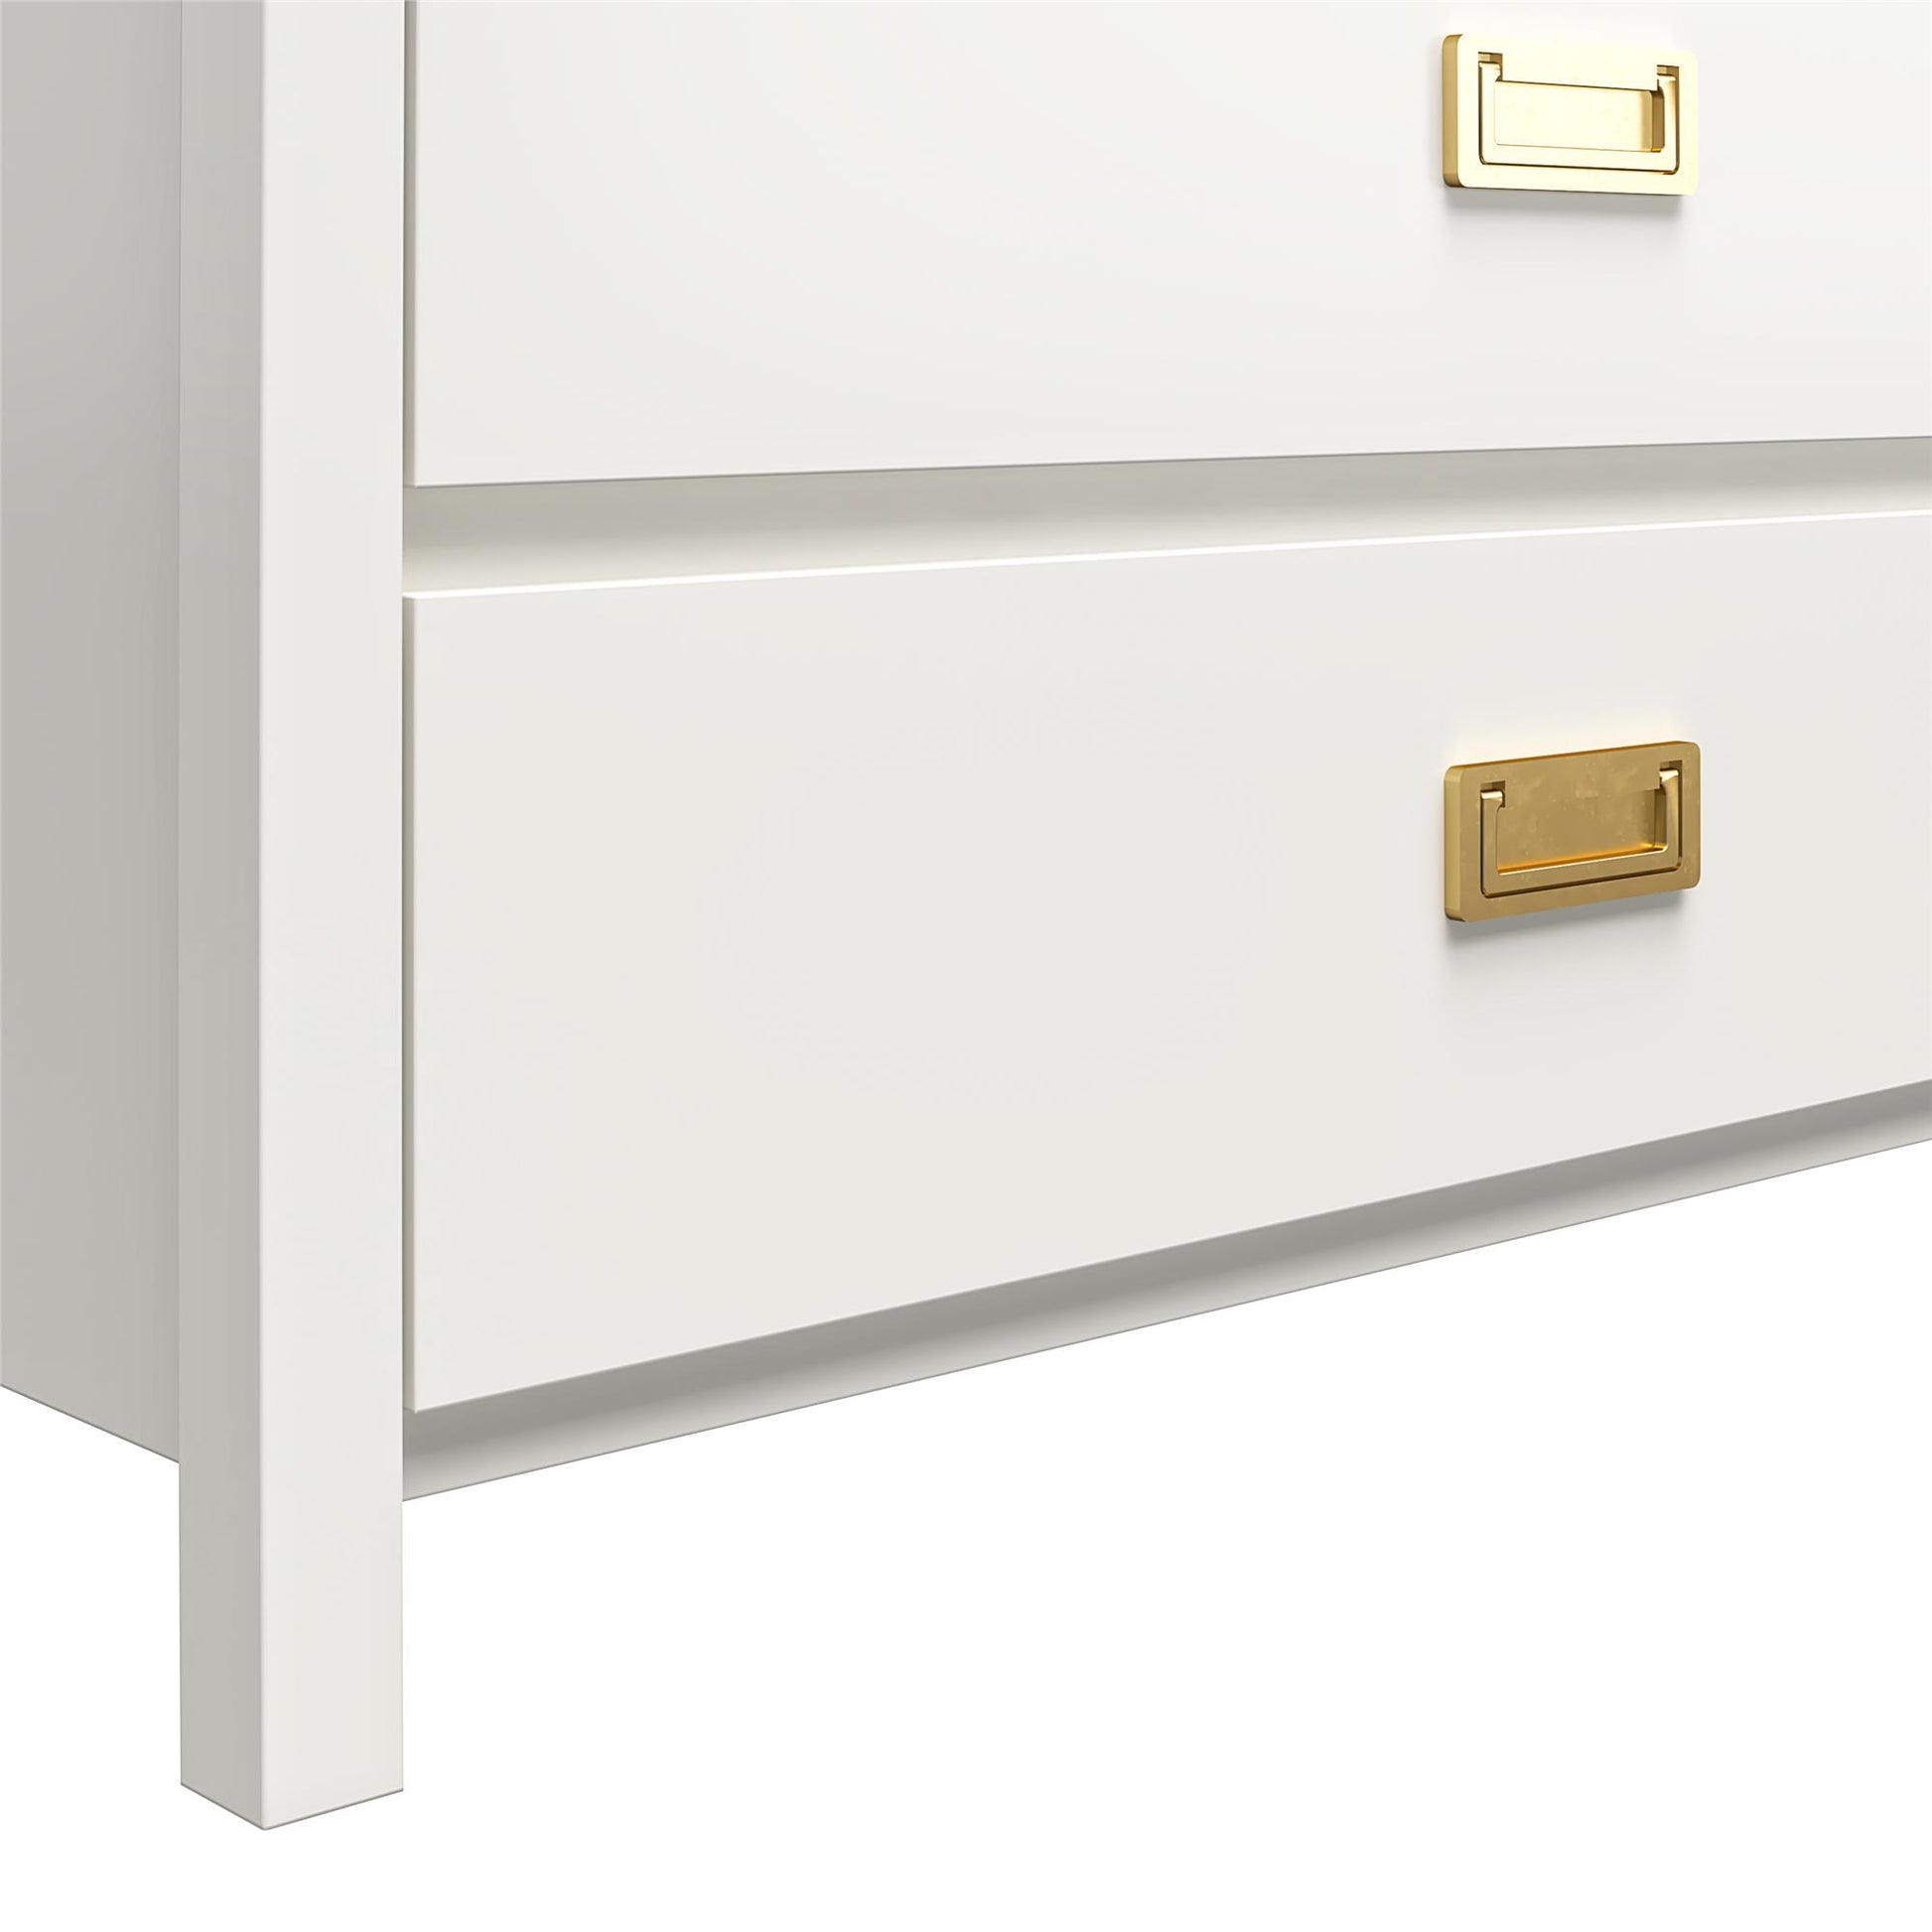 Monarch Hill Haven 5 Drawer Kids’ Dresser with Gold Drawer Pulls - White